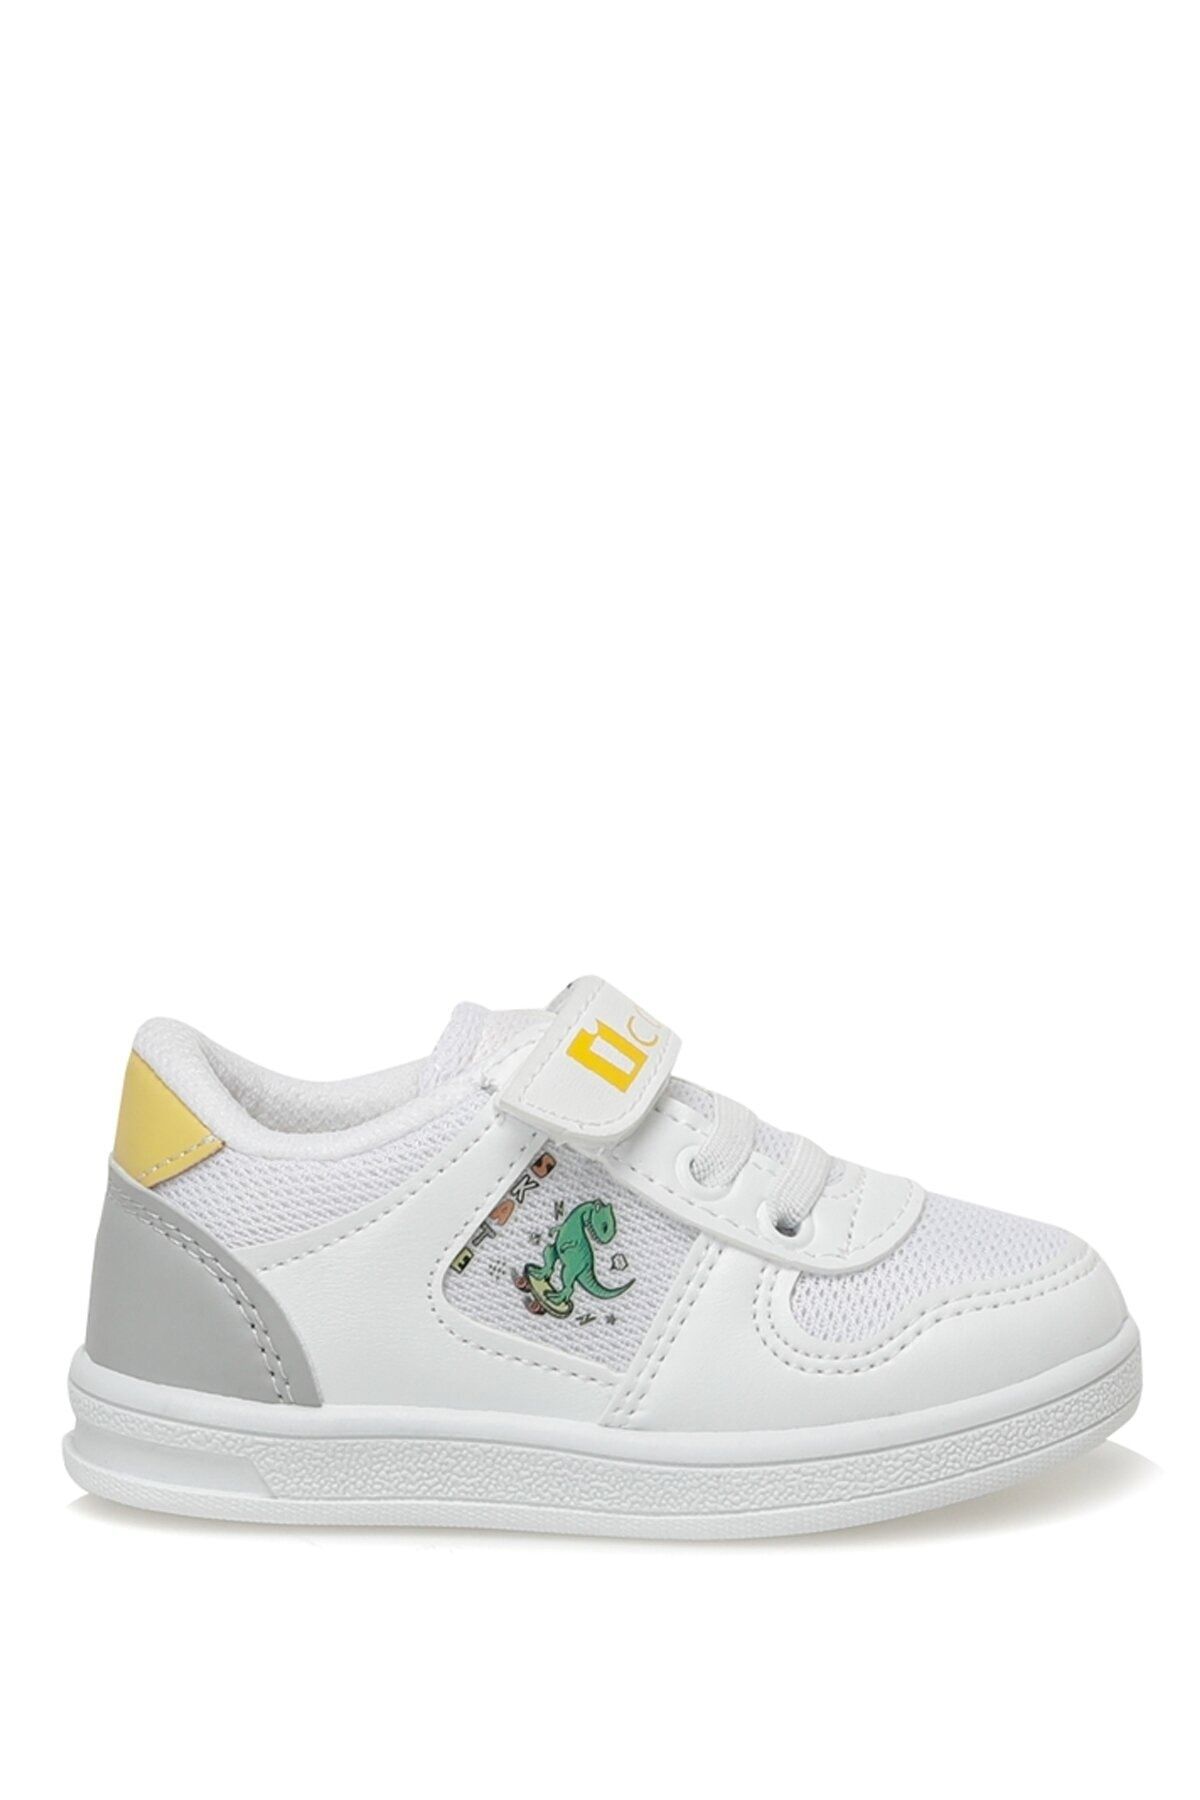 Icool Fermos 3fx Beyaz Erkek Çocuk Sneaker